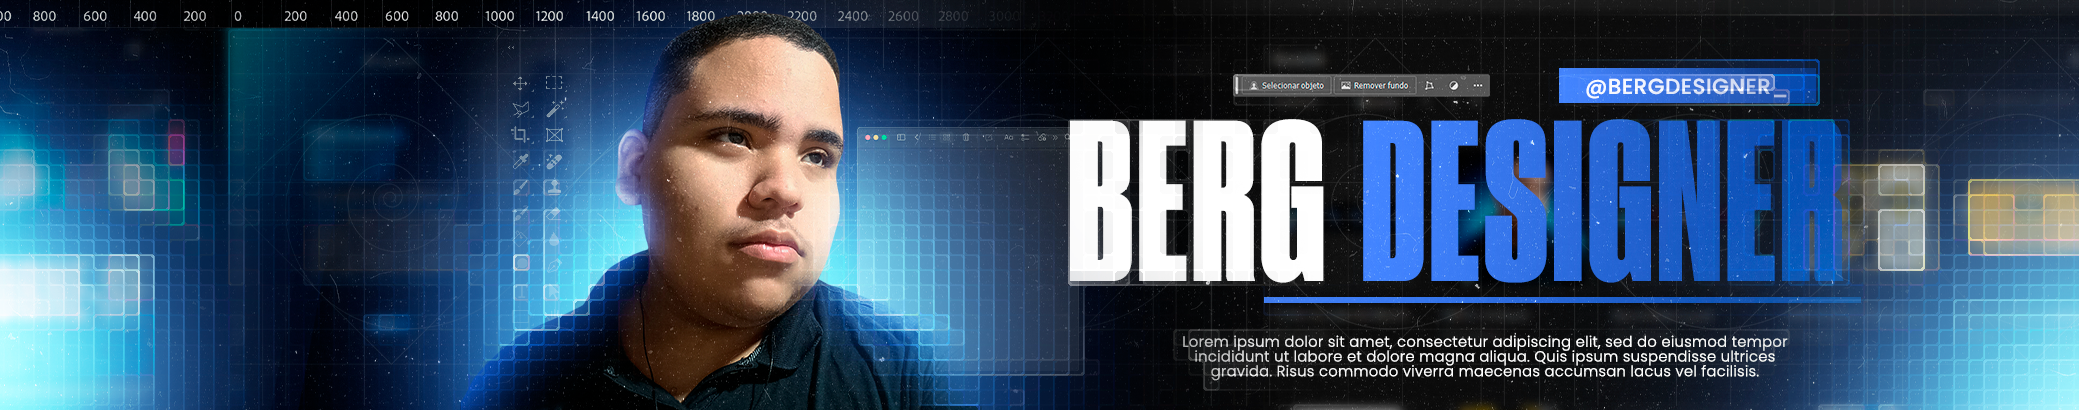 Berg Designer's profile banner